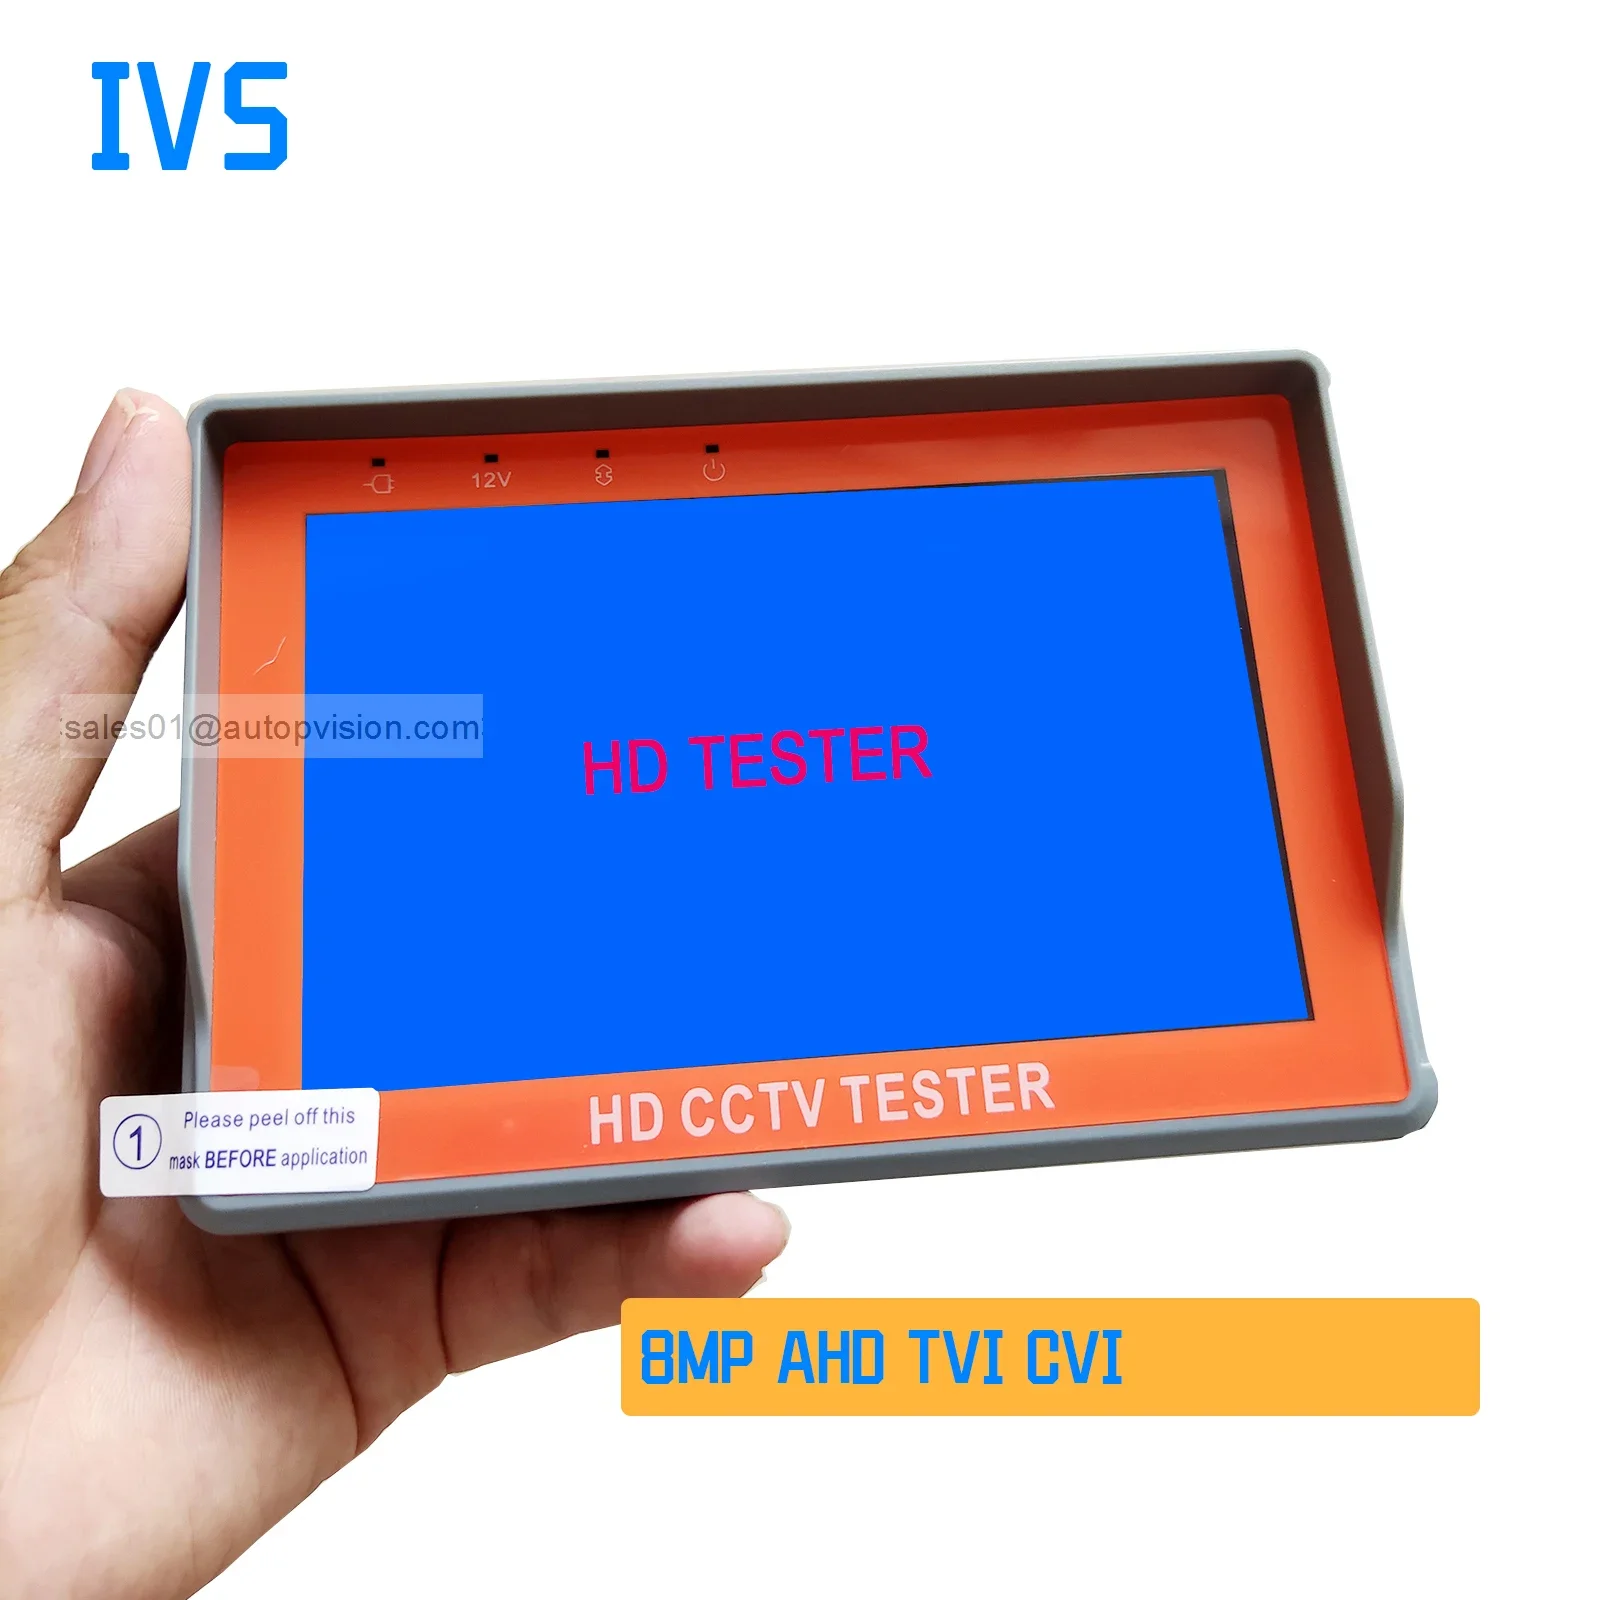 IV5  Wrist CCTV Tester 1080P 8MP Portable Camera Tester AHD TVI CVI CVBS Tester TFT LCD Analog Video 12V Power Output